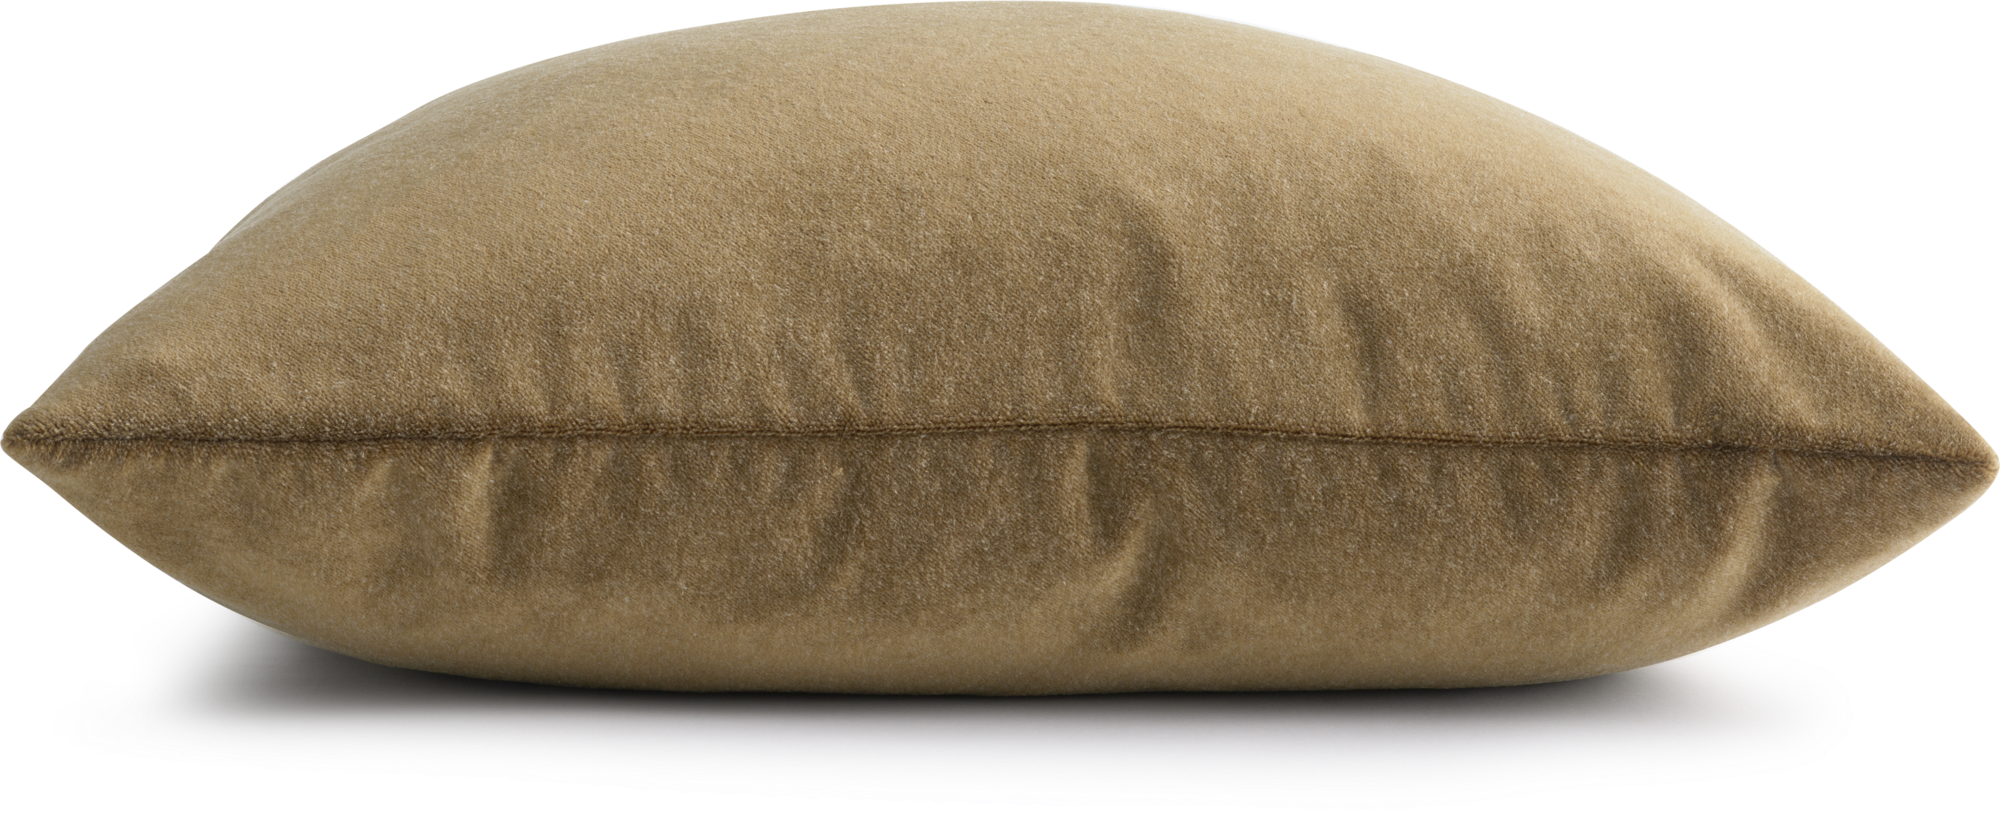 Barkley decorative pillow